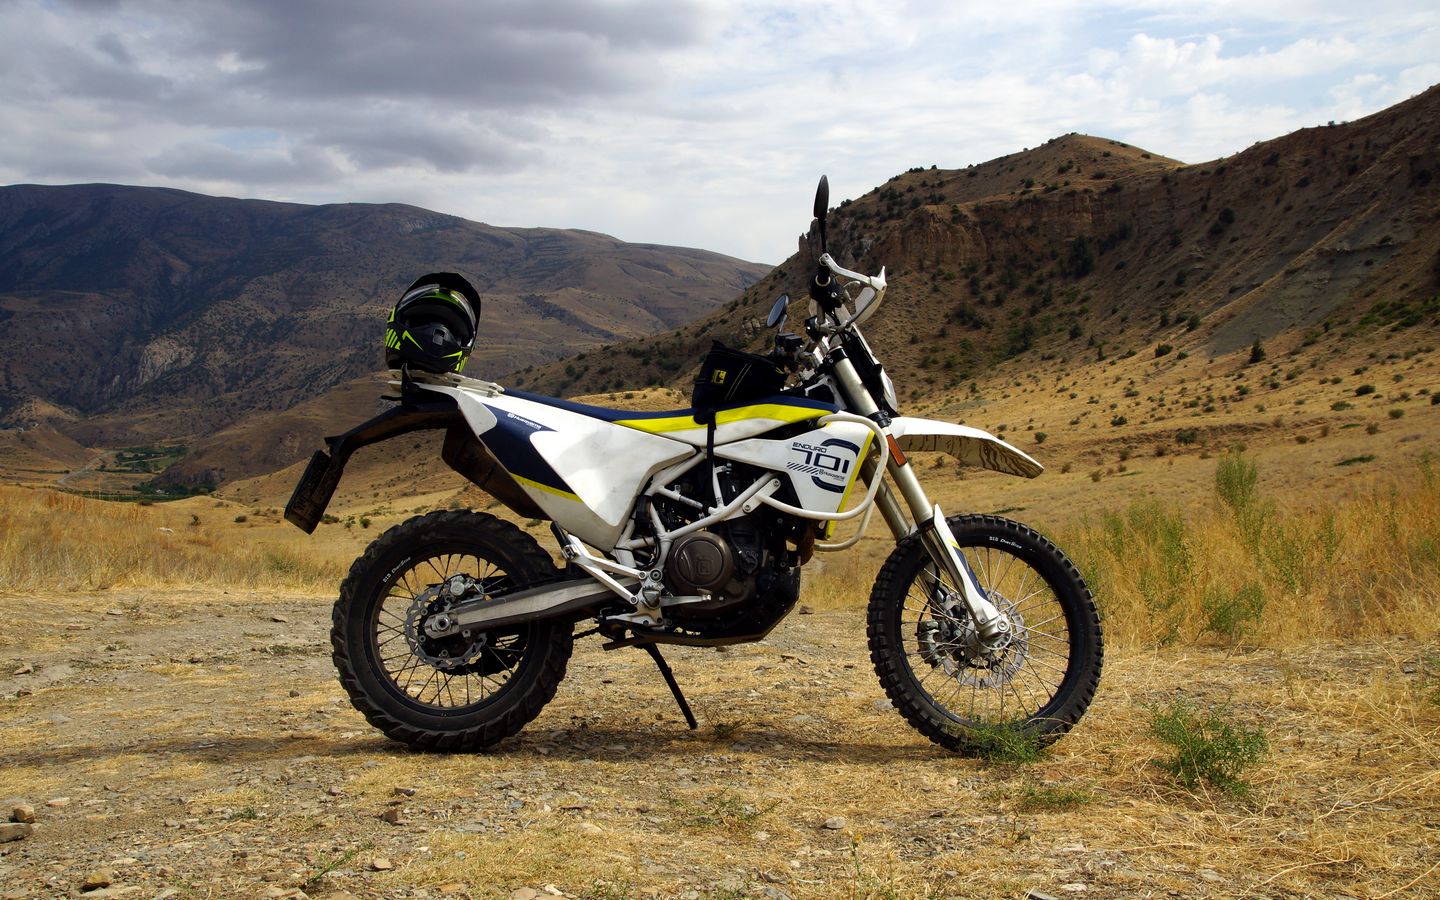 1440x900 Wallpaper motorcycle, bike, mountains, nature